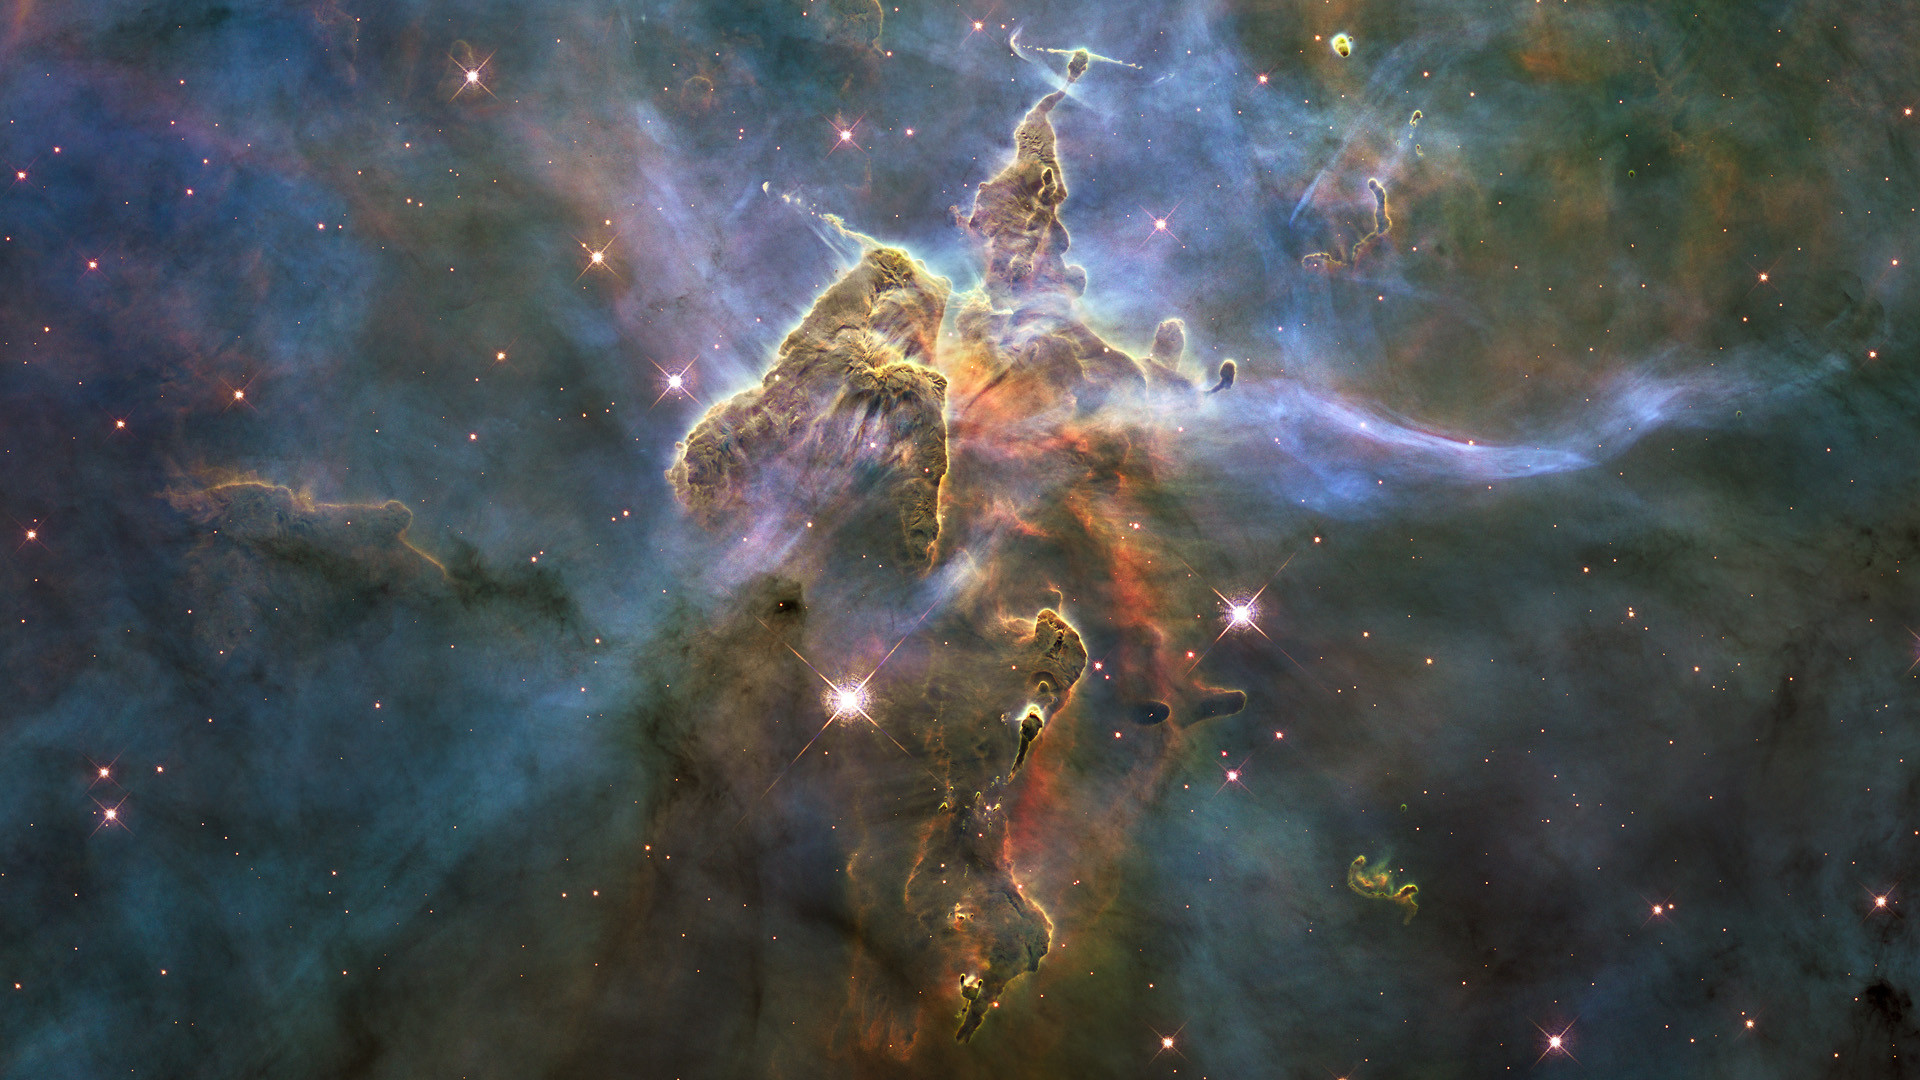 Mystic Mountain region of Carina Nebula